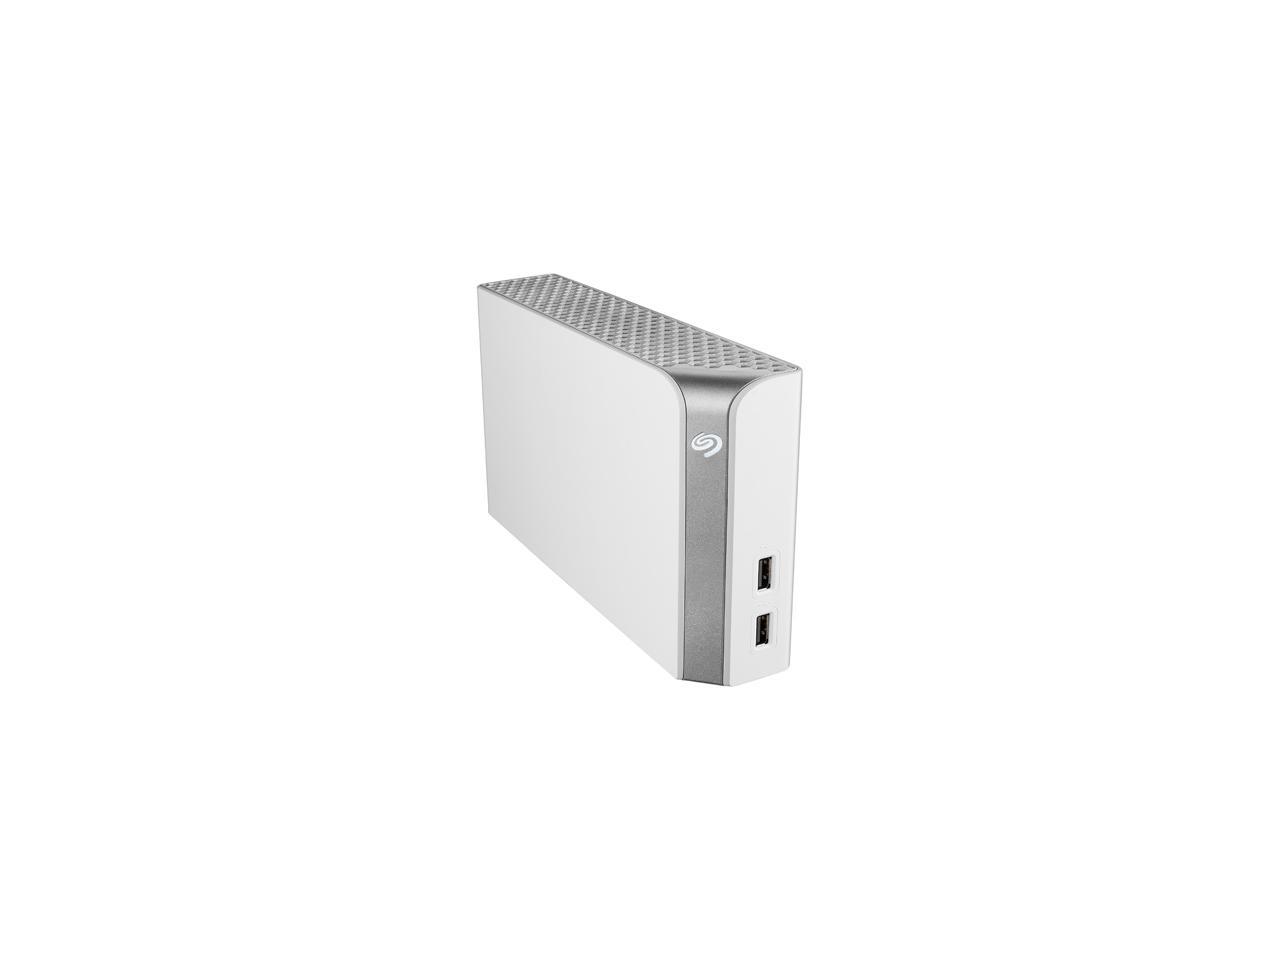 Seagate Backup Plus Hub for Mac 4TB USB 3.0 Desktop Drive with Integrated USB Hub Model STEM4000400